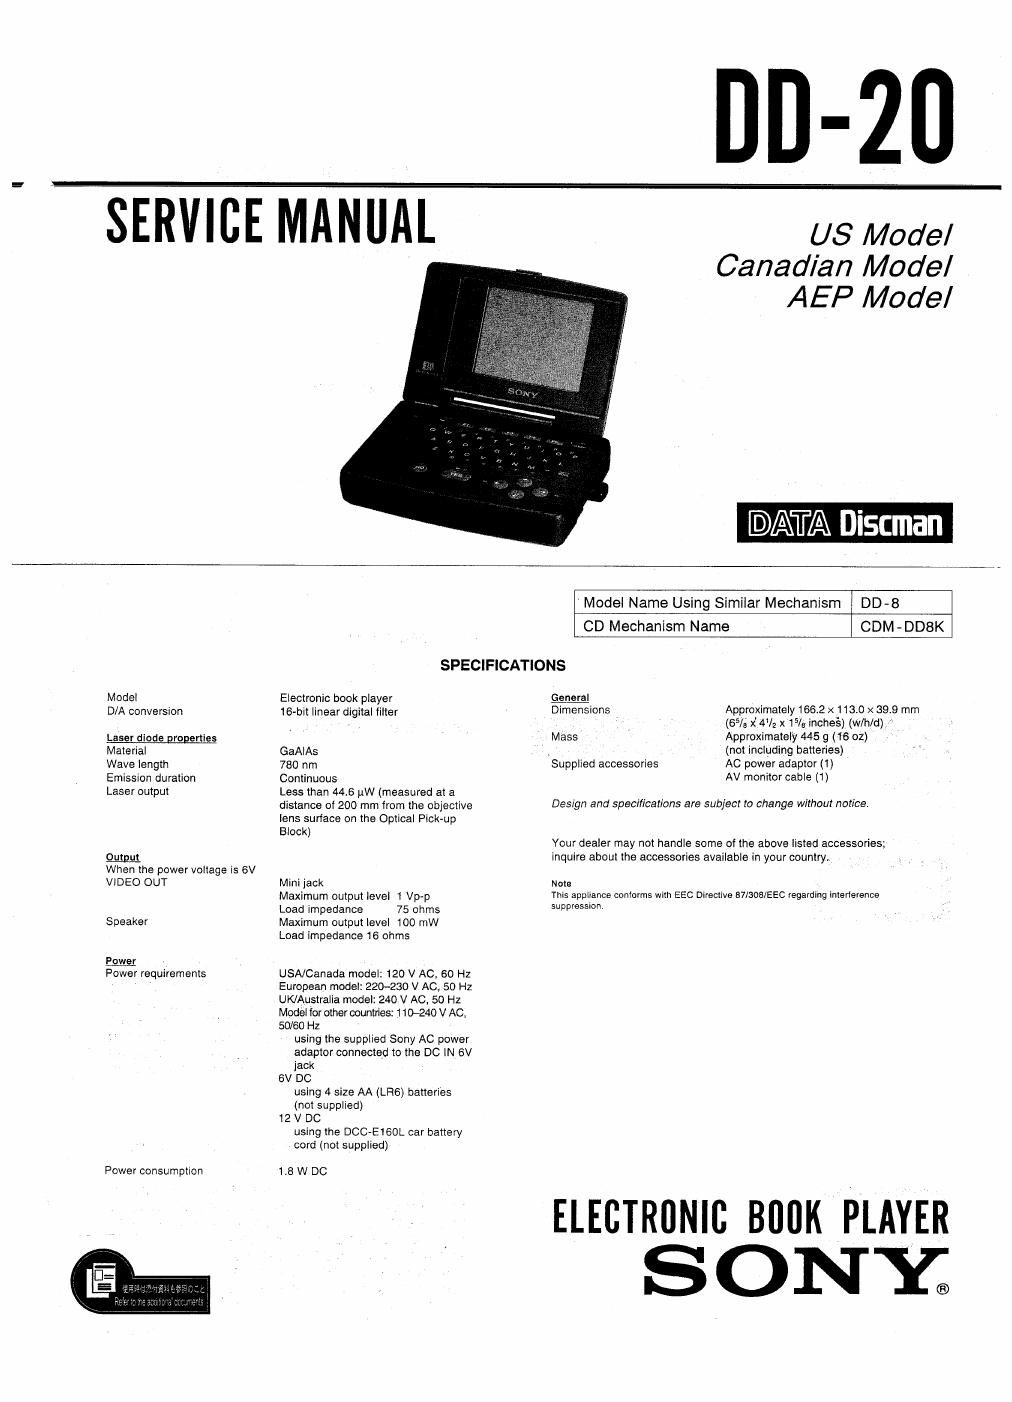 sony dd 20 service manual